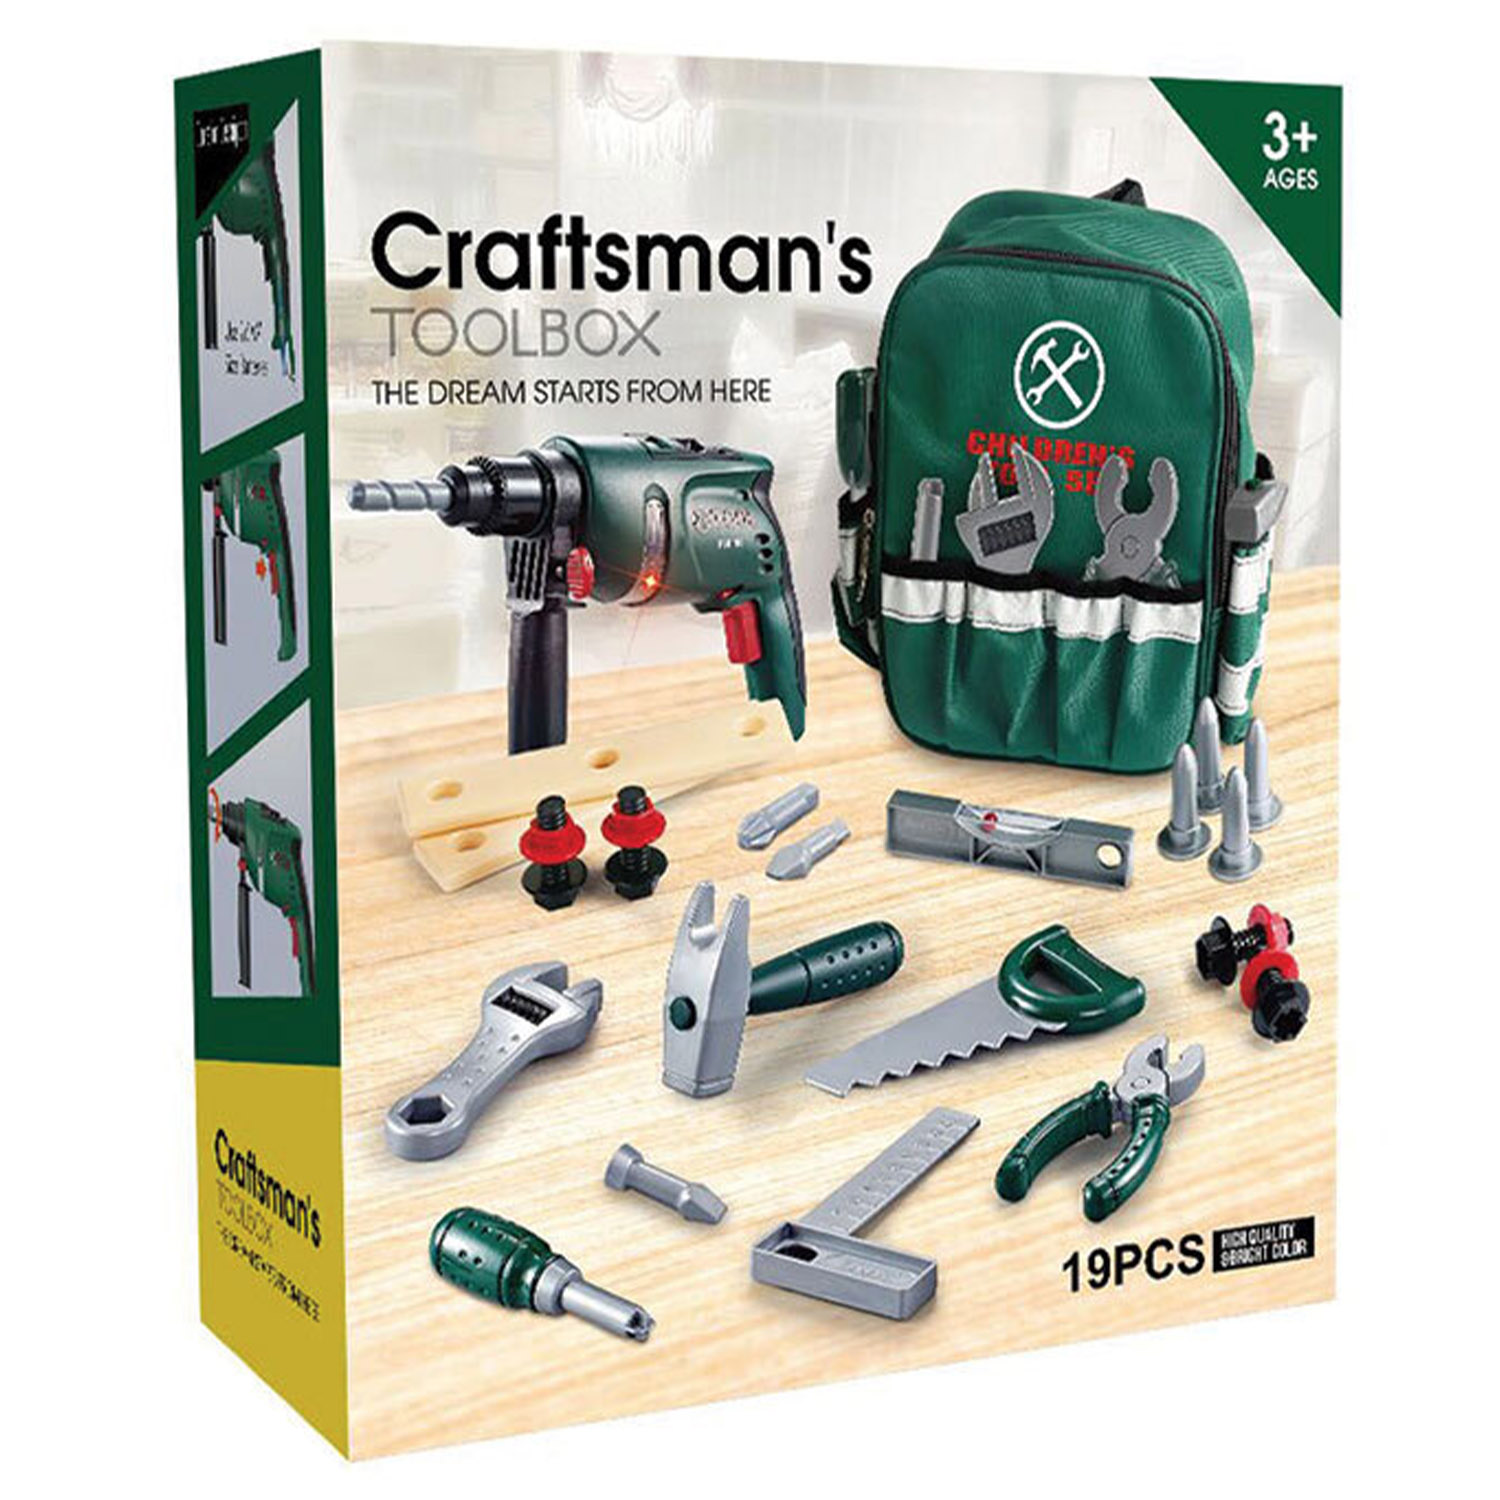 Craftsman's Tool Box 19 Piece Play Set Image 1